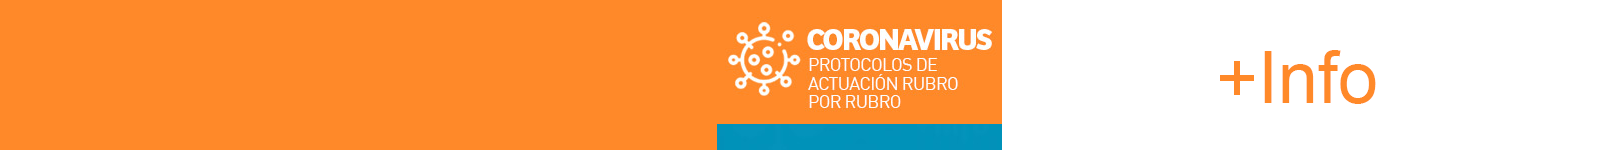 CORONAVIRUS Protocolo